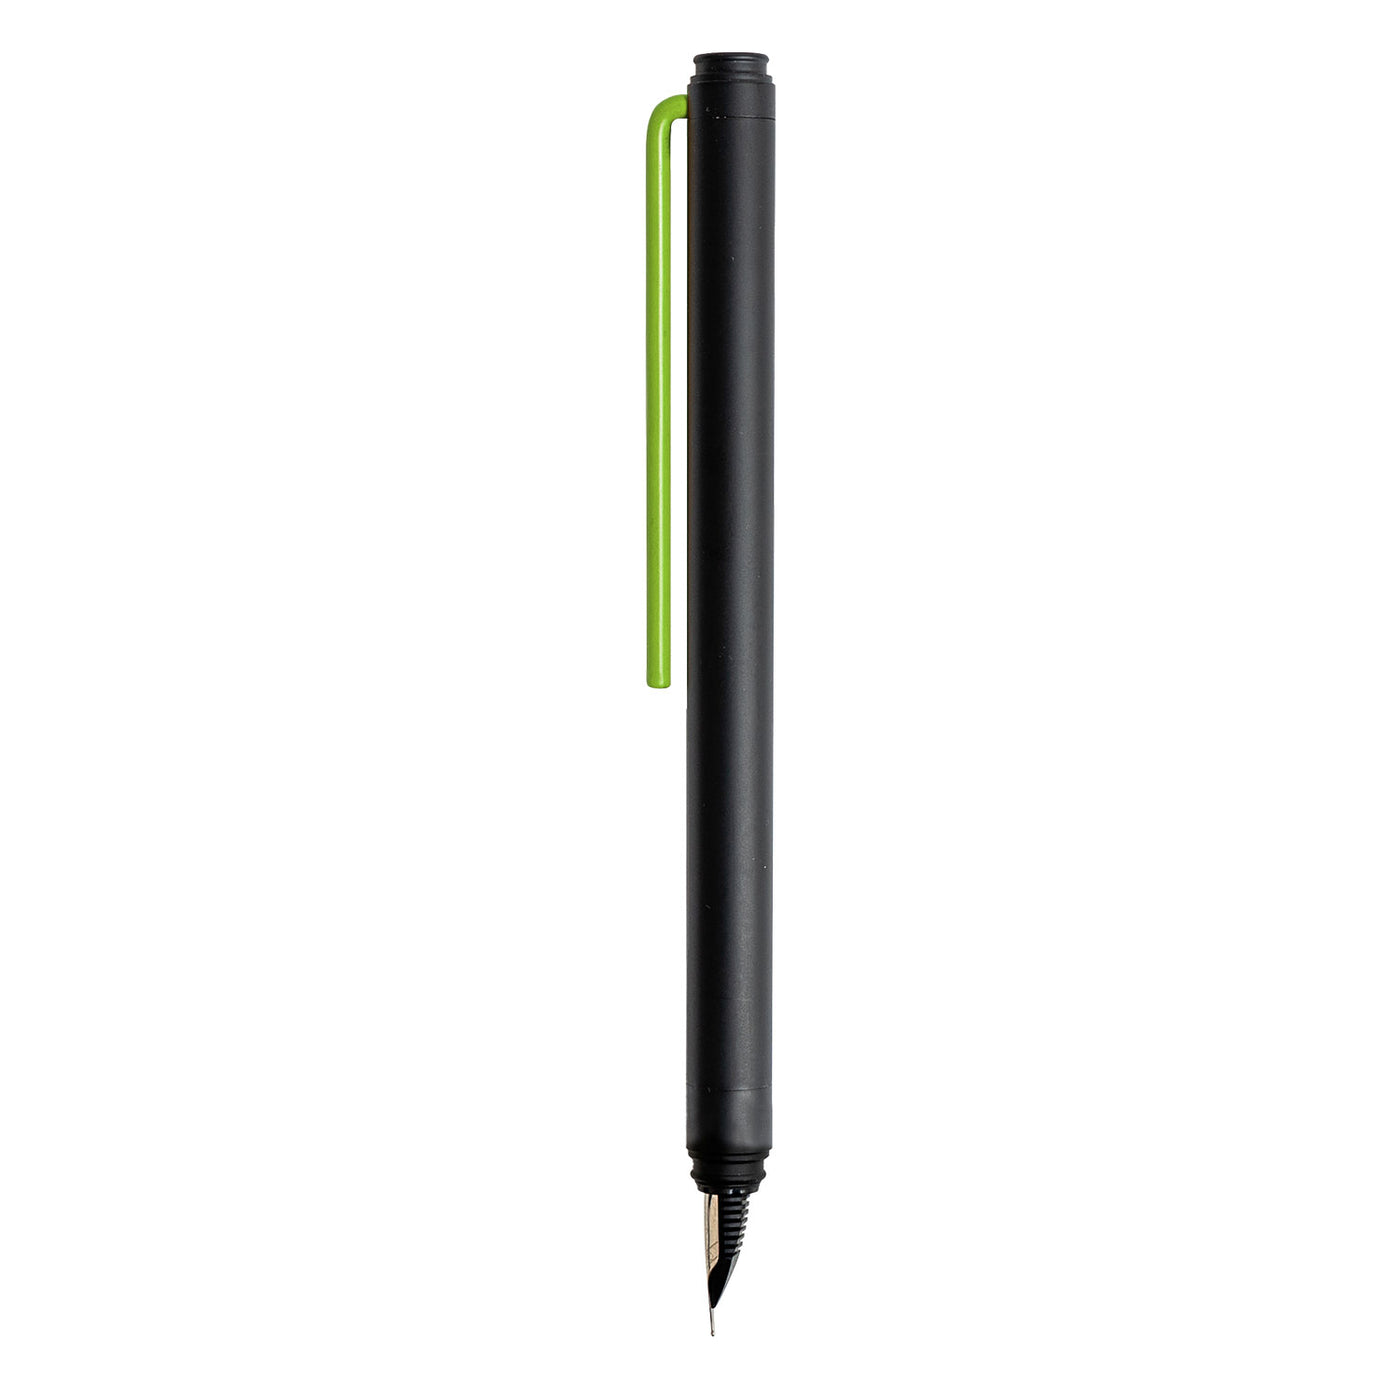 Pininfarina Segno Grafeex Fountain Pen - VerdePininfarina Segno Grafeex Fountain Pen - Verde